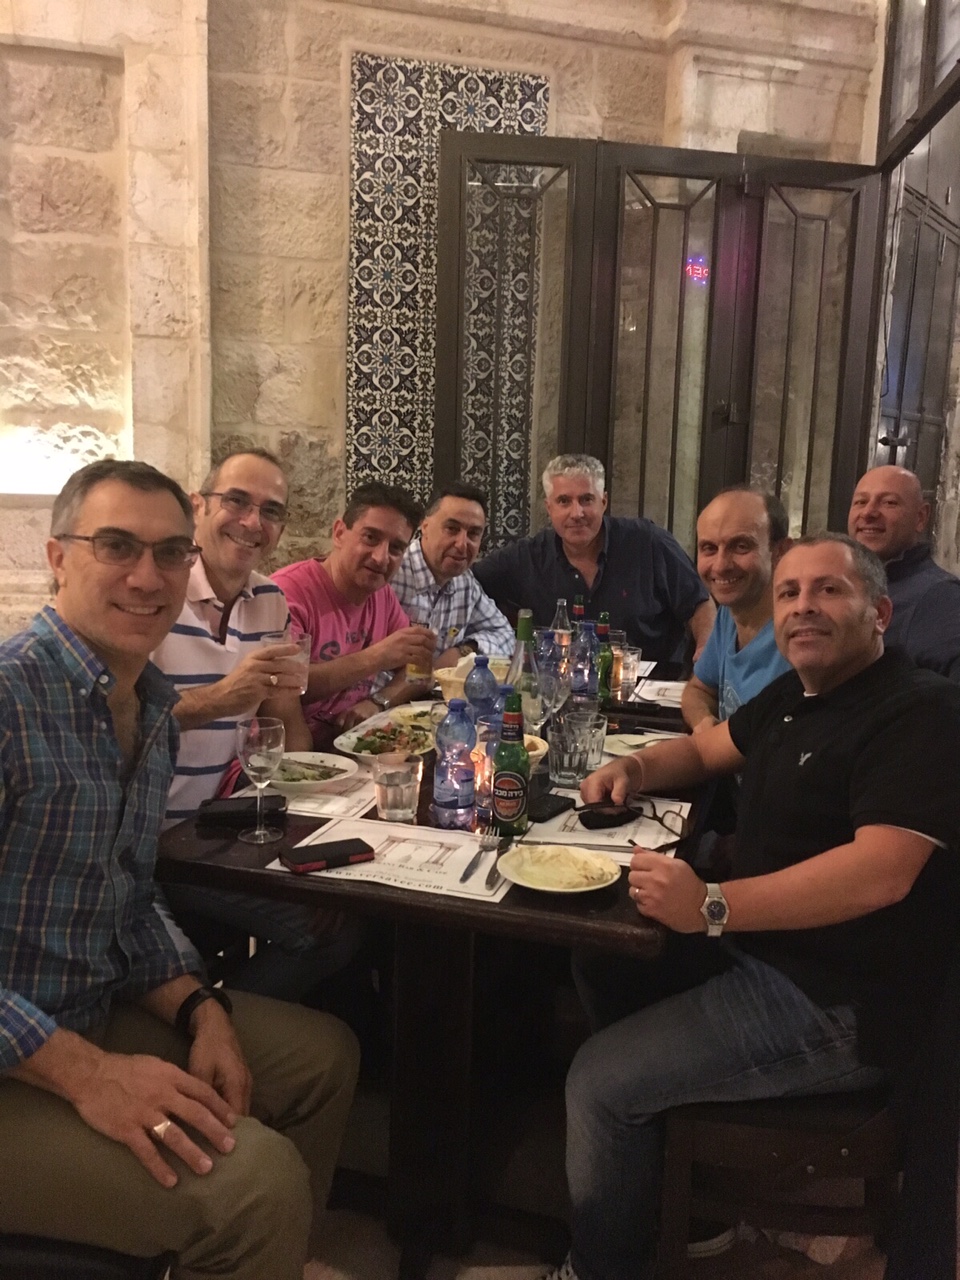 The Motley Crew in Jerusalem